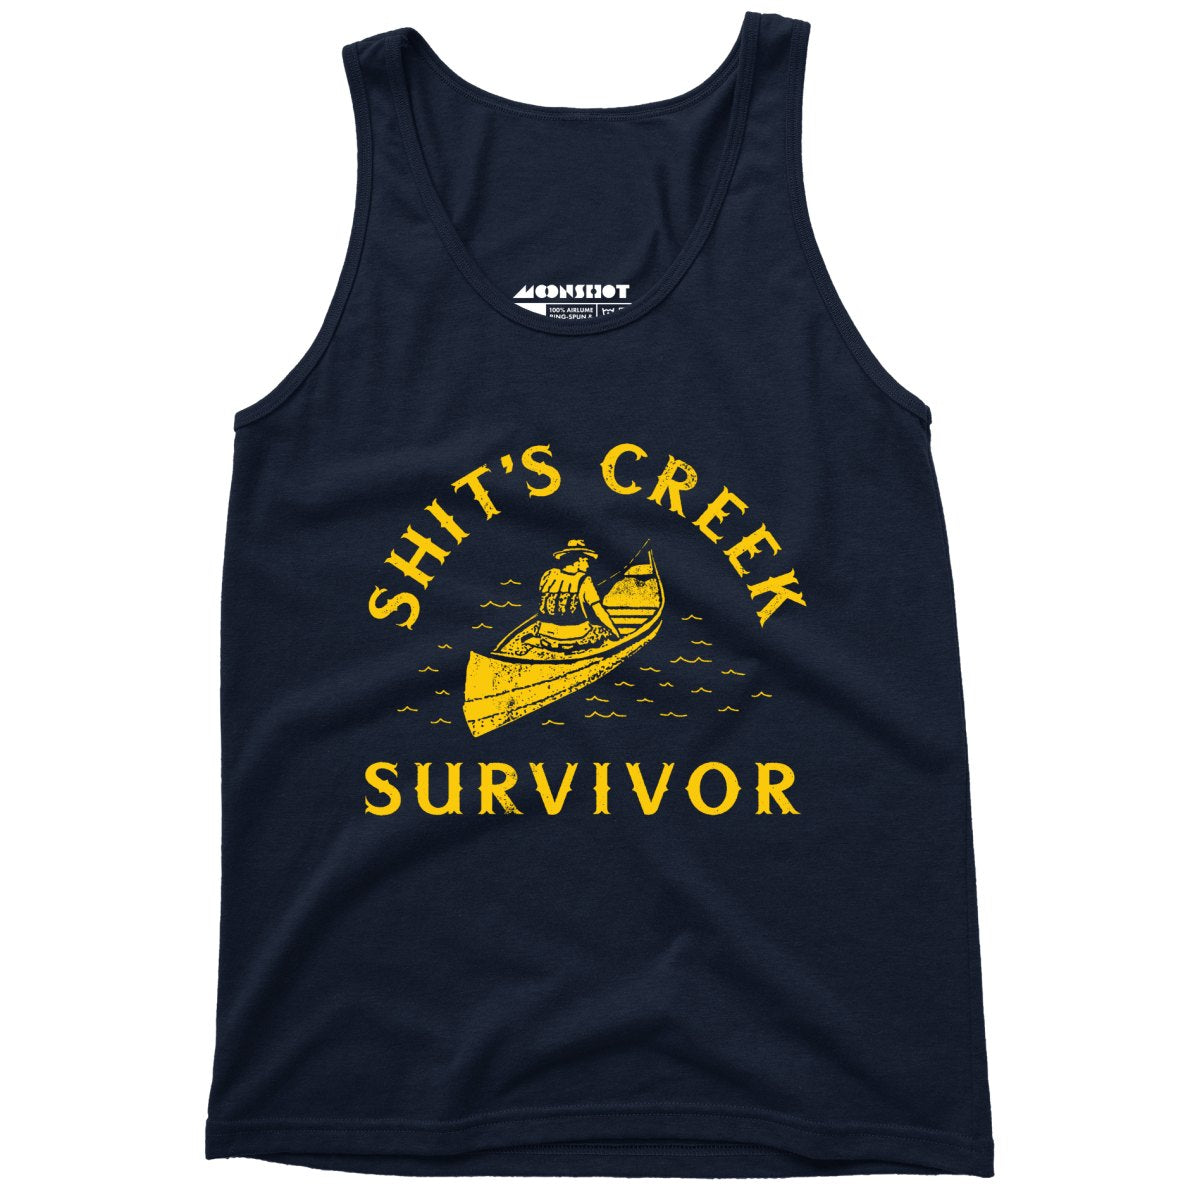 Shit's Creek Survivor - Unisex Tank Top